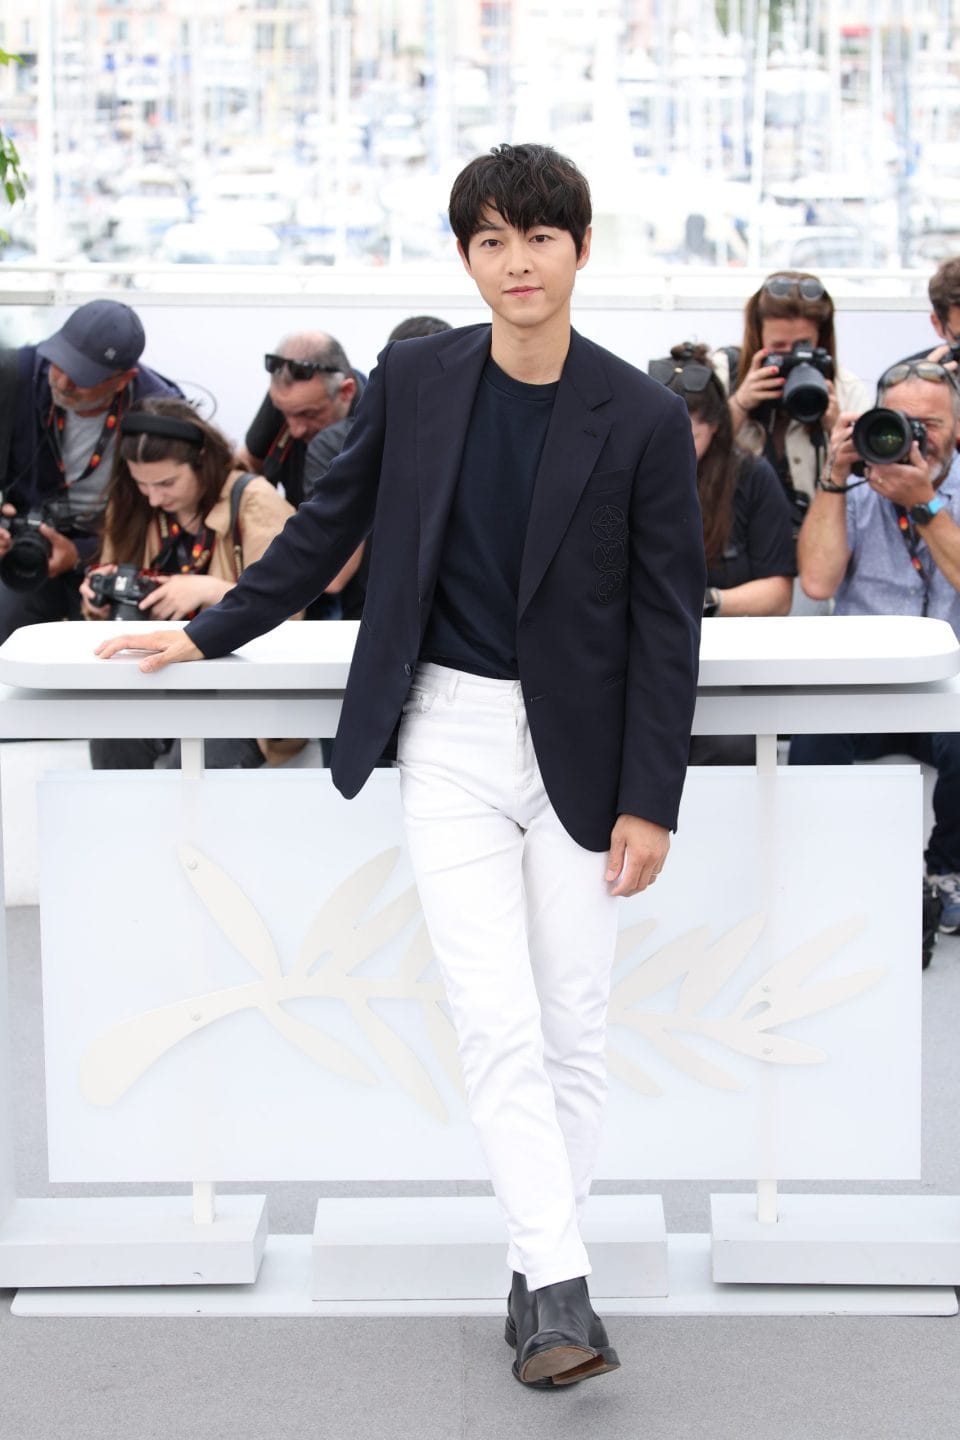 Louis Vuitton names Song Joong-ki its newest house ambassador